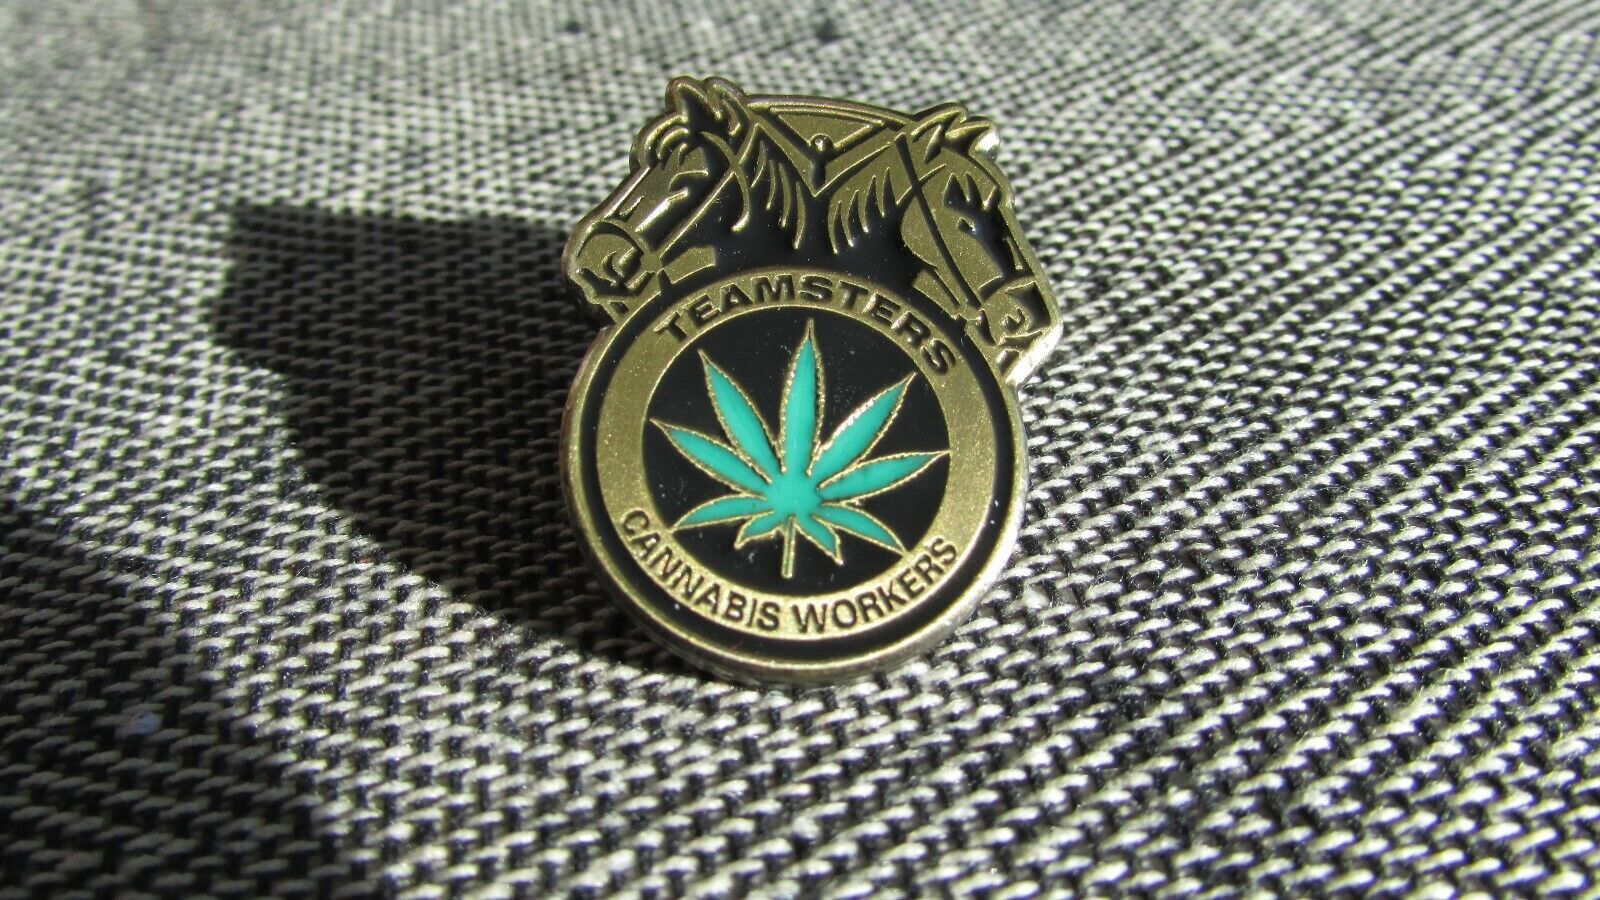 Cannabis Workers Teamsters Union Lapel Pin Marijuana Leaf  NEW